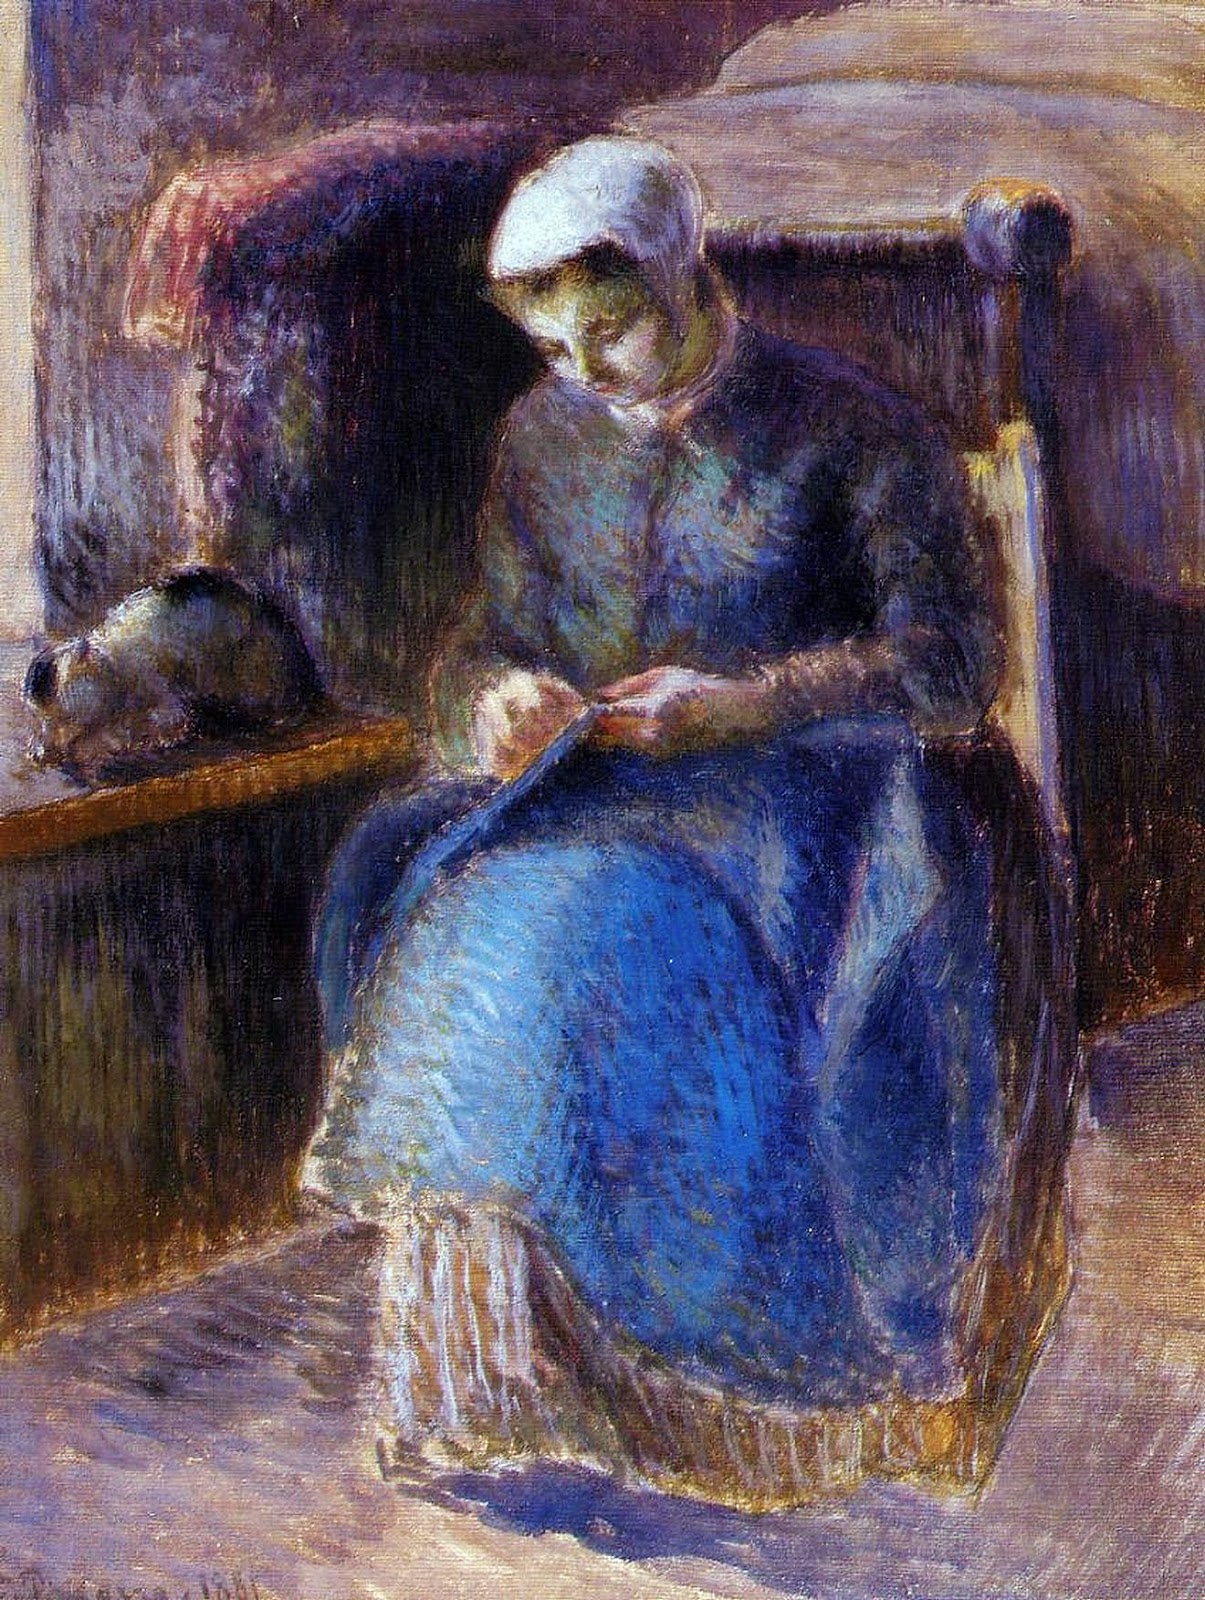 Camille+Pissarro-1830-1903 (204).jpg